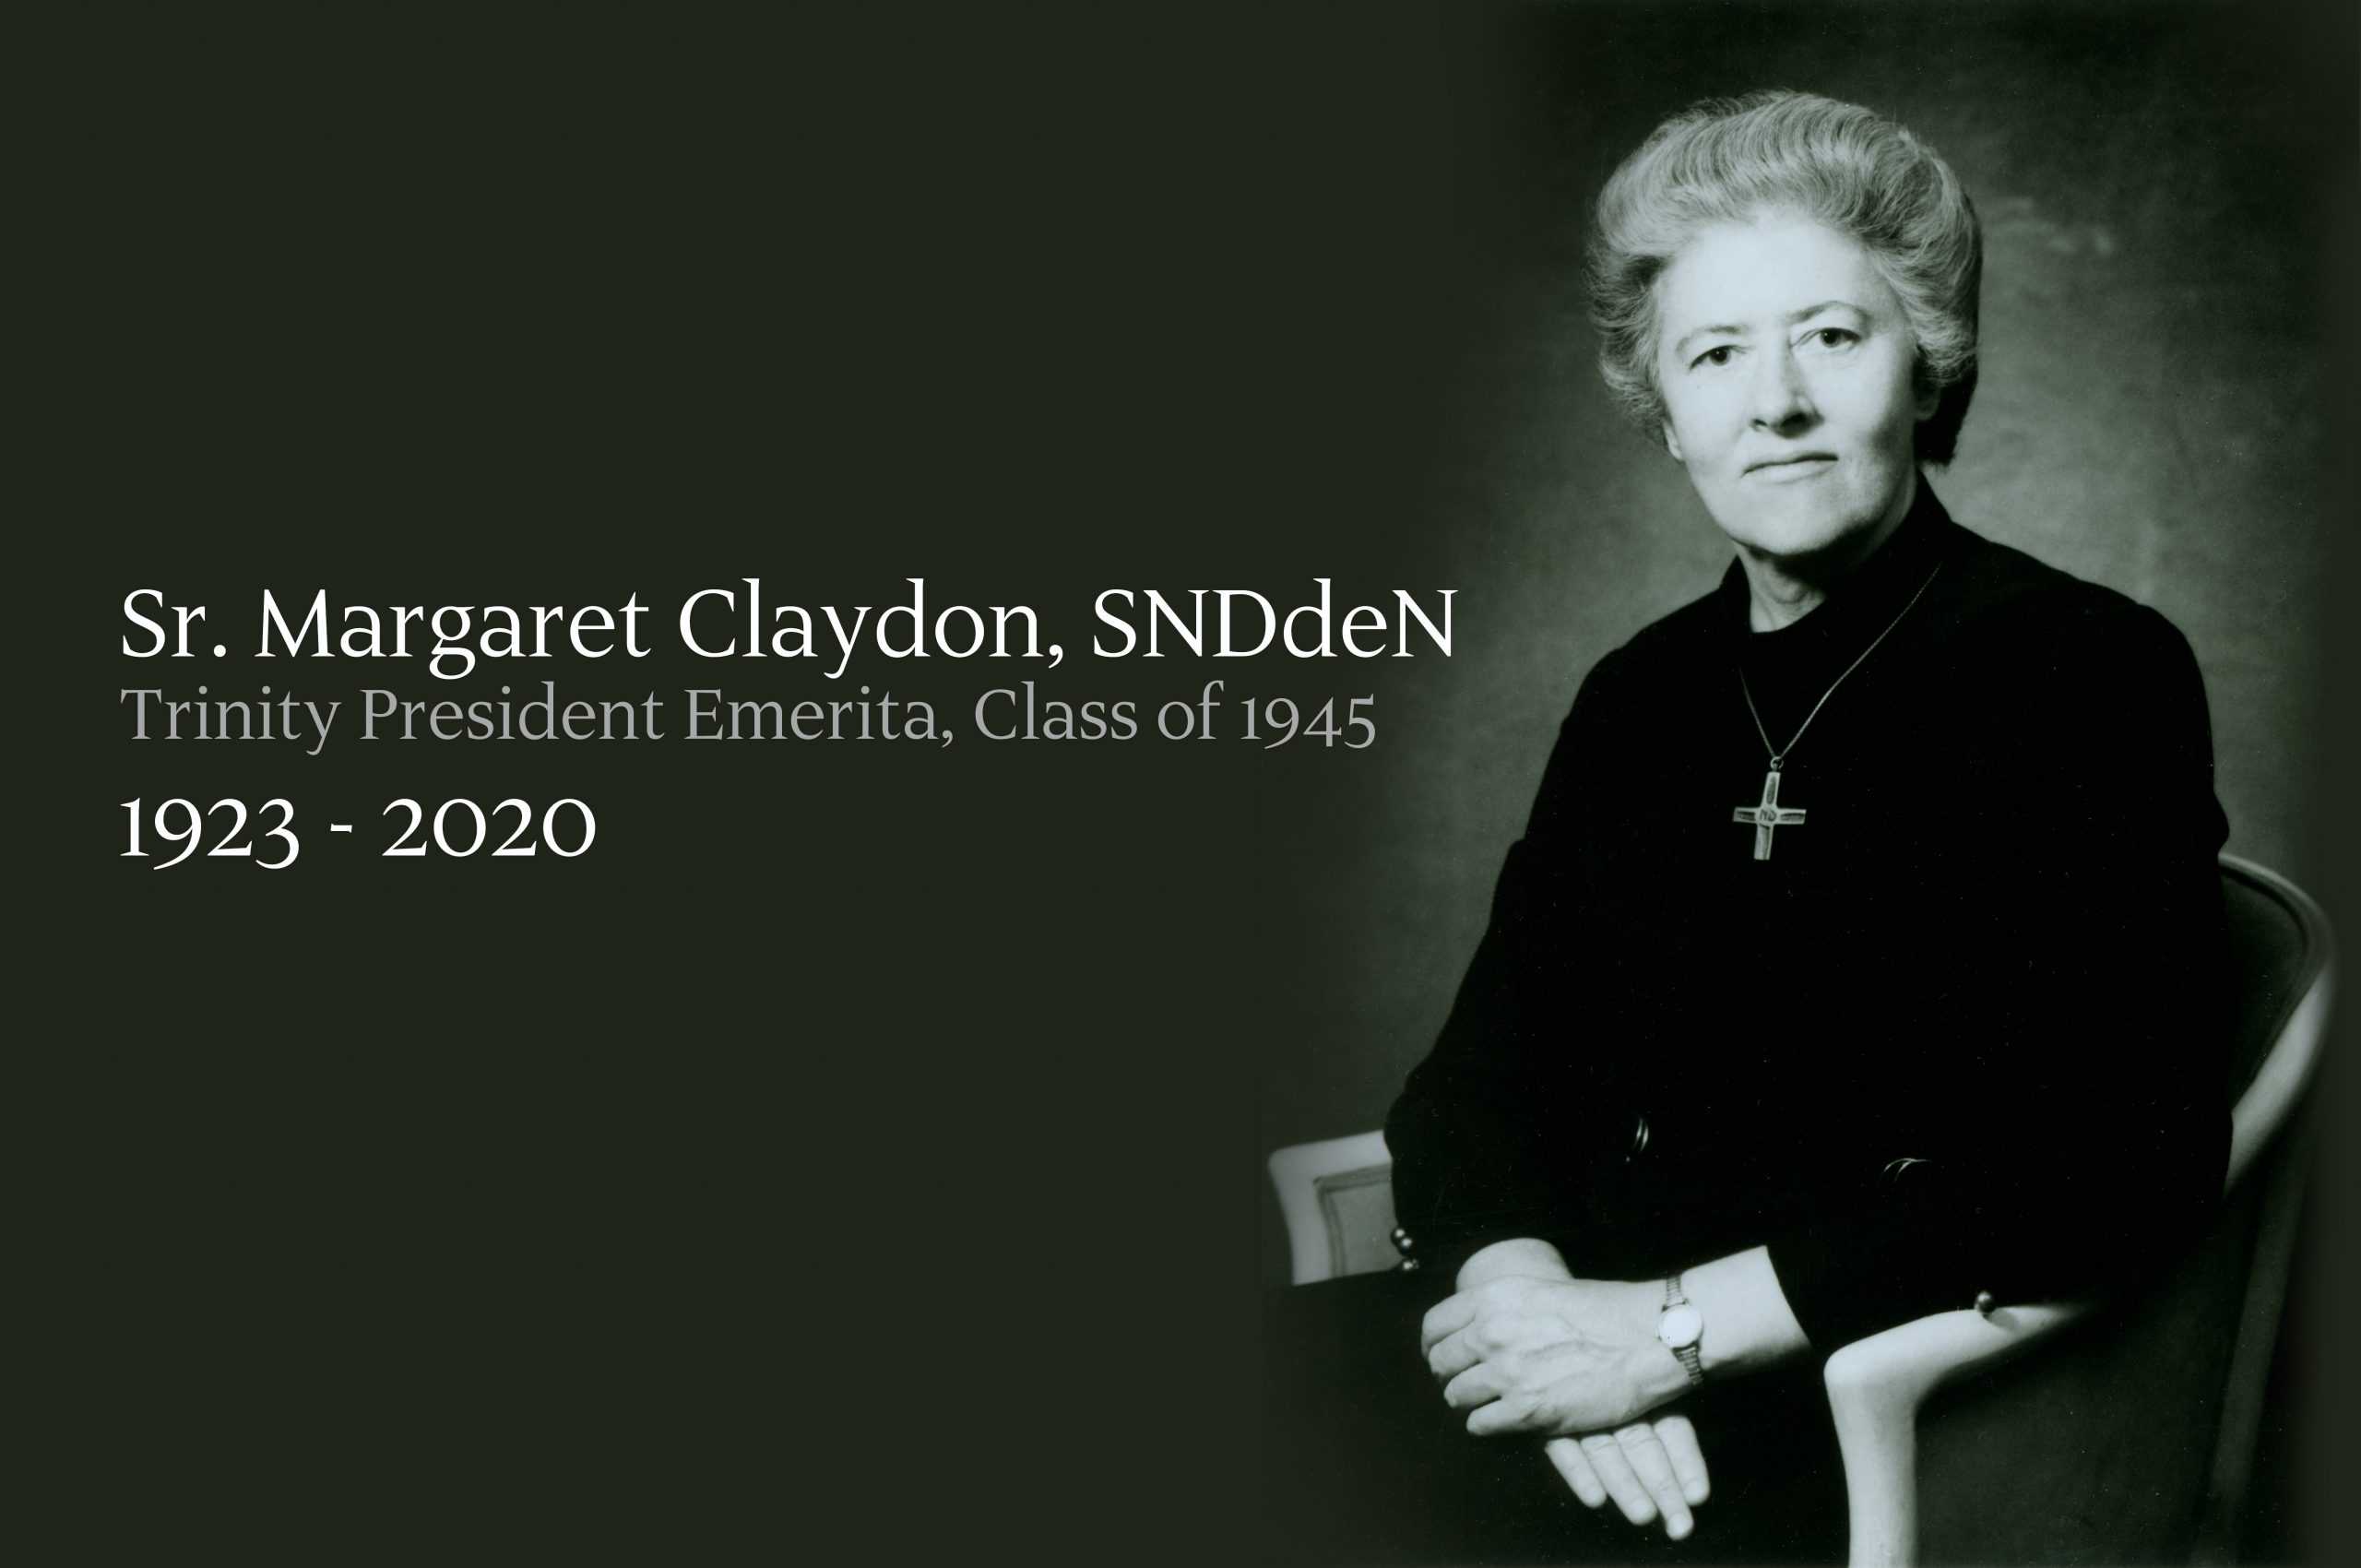 Sr. Margaret Claydon, SNDdeN Trinity President Emerita, Class of 1945, 1923-2020